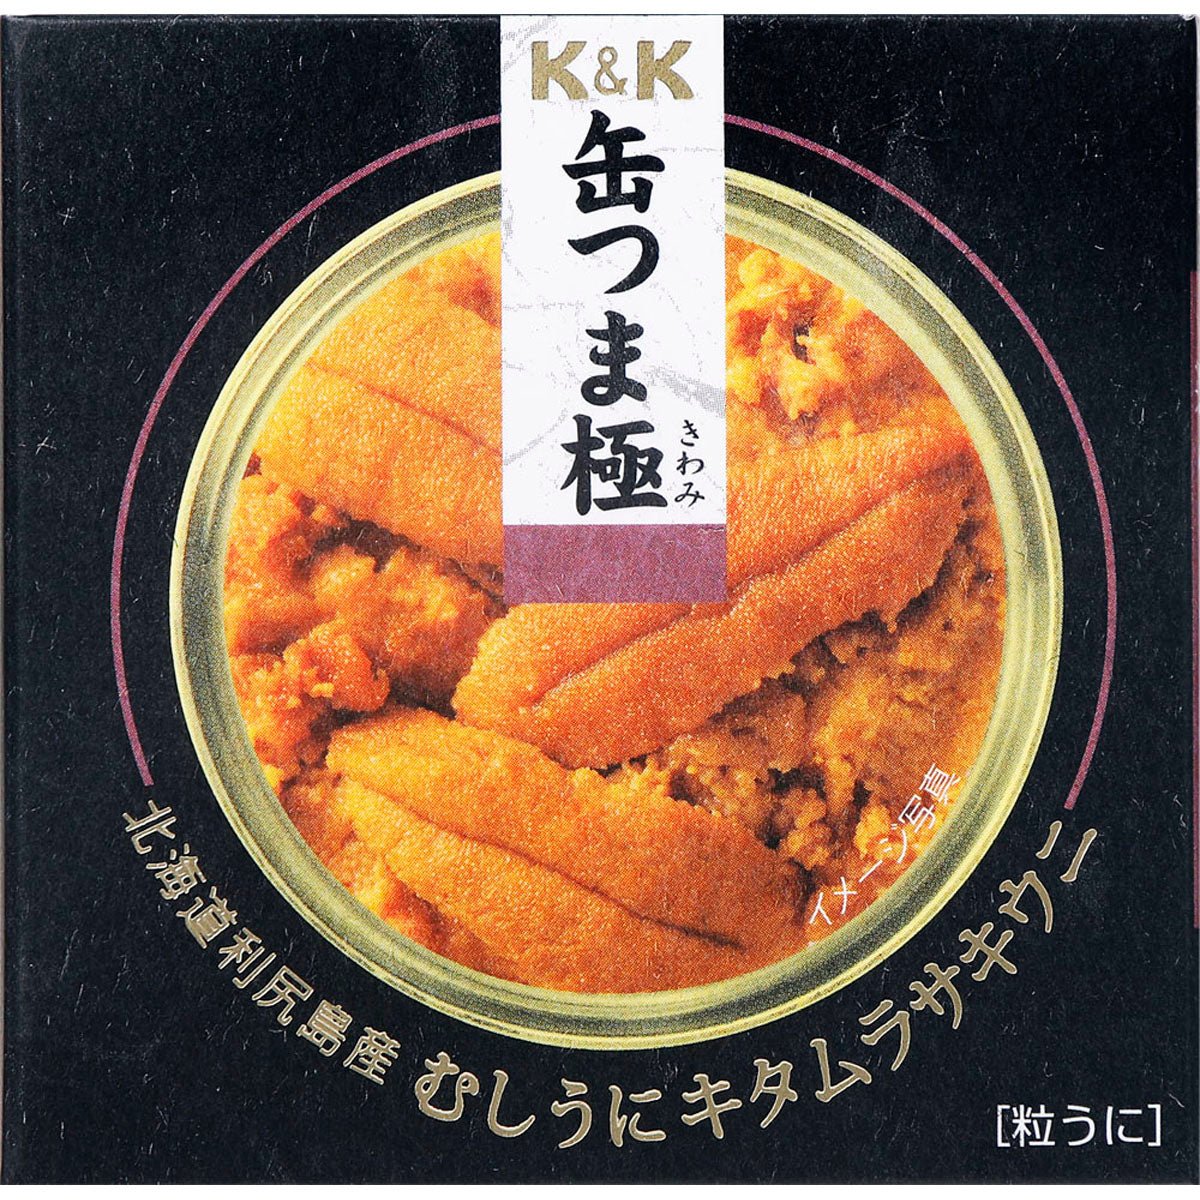 K & K Can Tsushima Ereds Melts from Hokkaido Rishiri Island Mushi Kitamurasaki